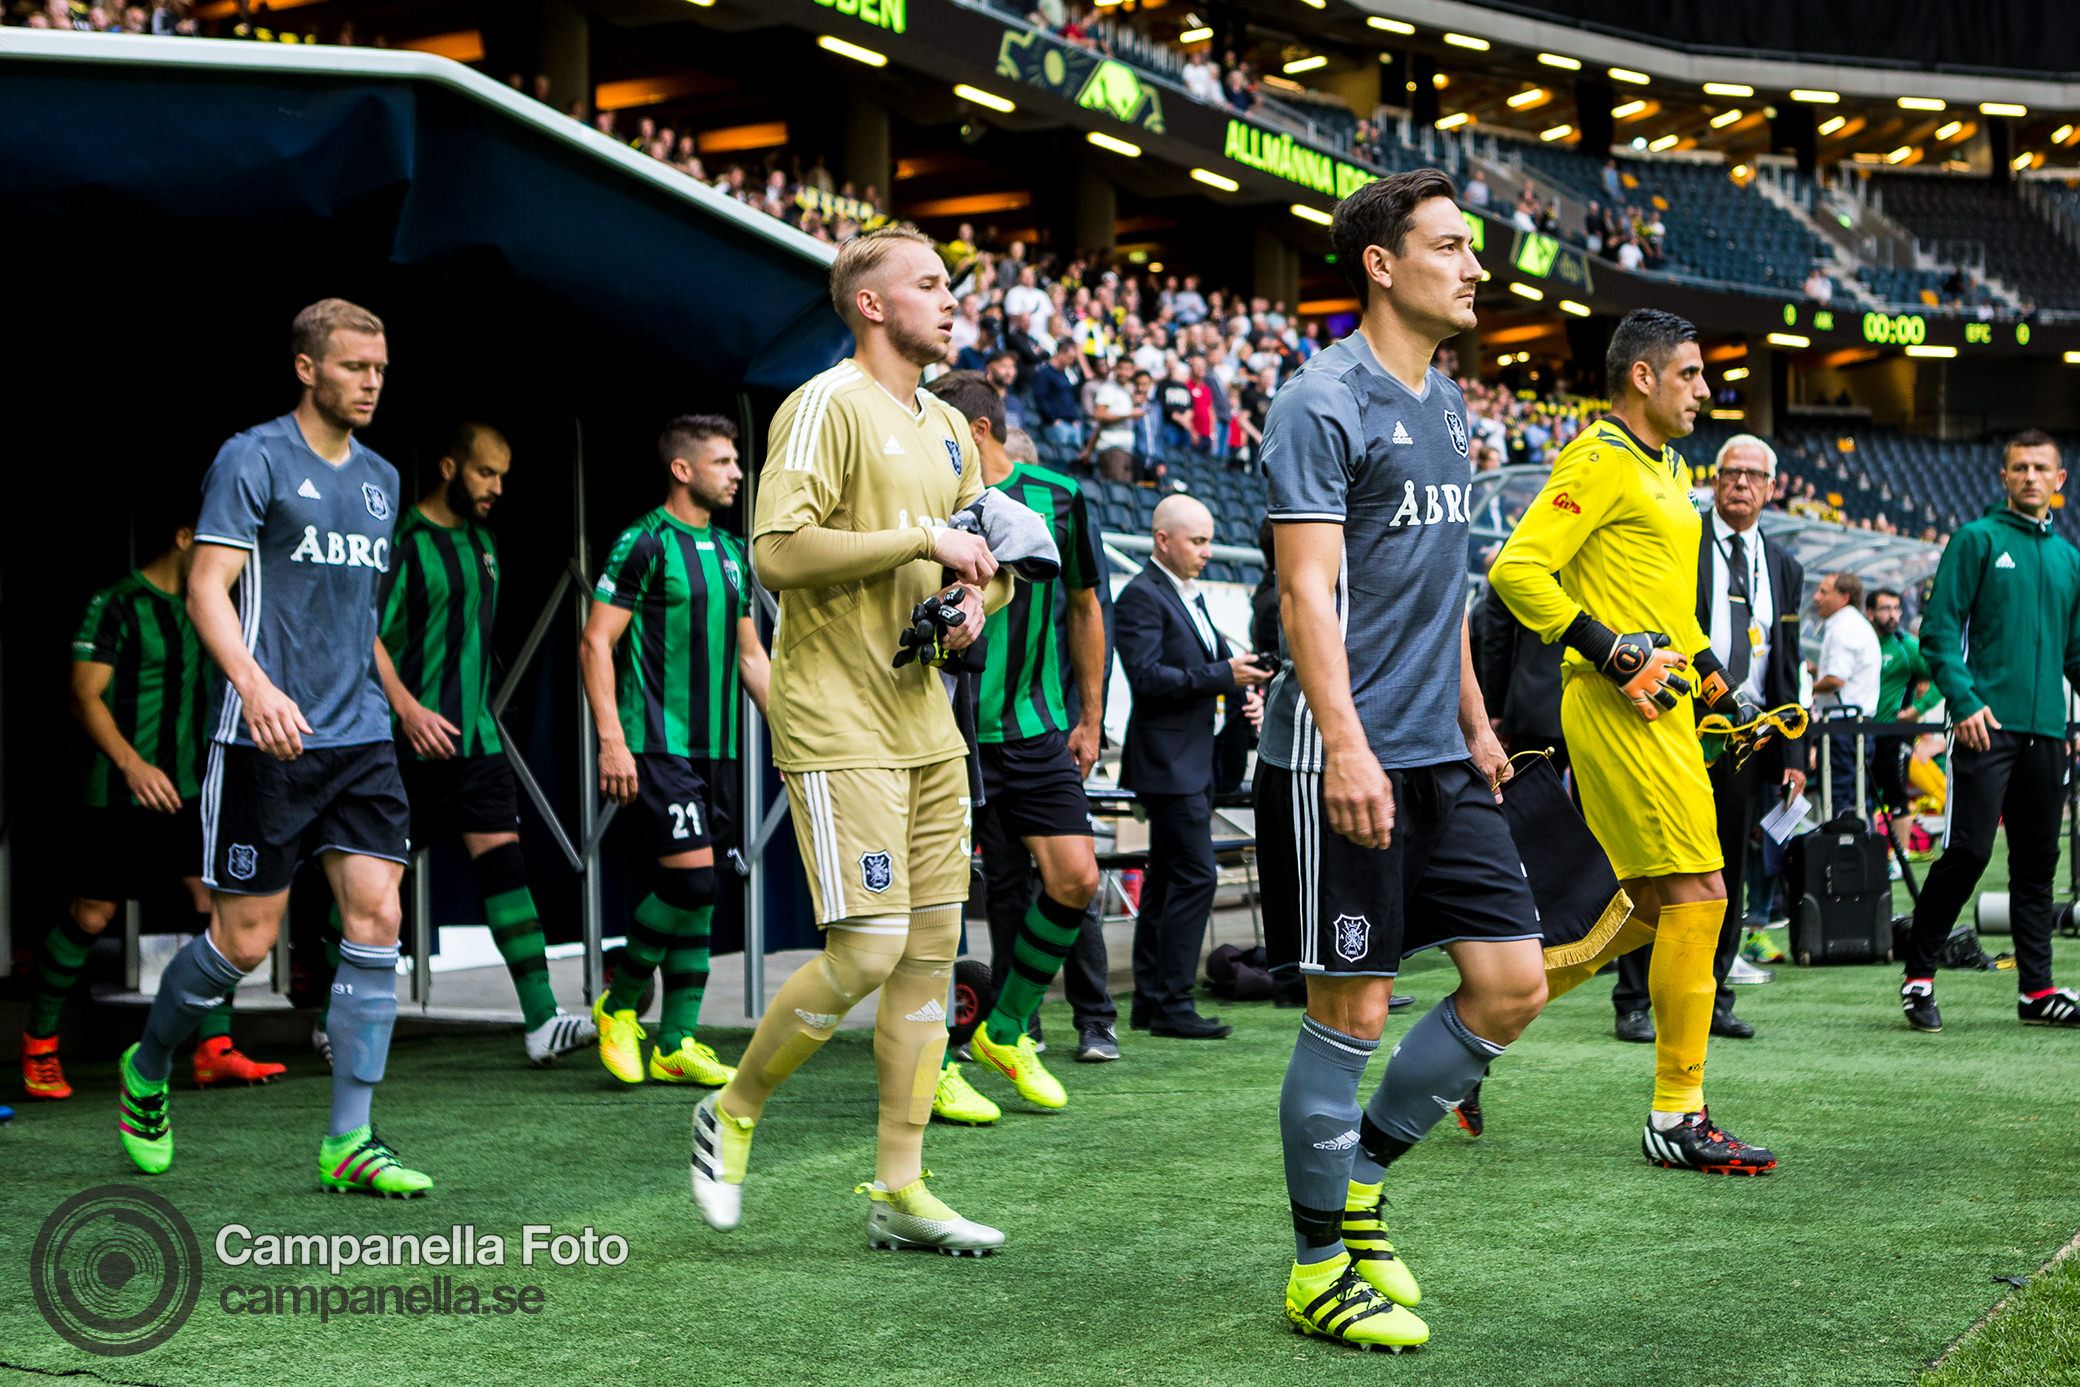 AIK scrapes past Europa FC - Michael Campanella Photography